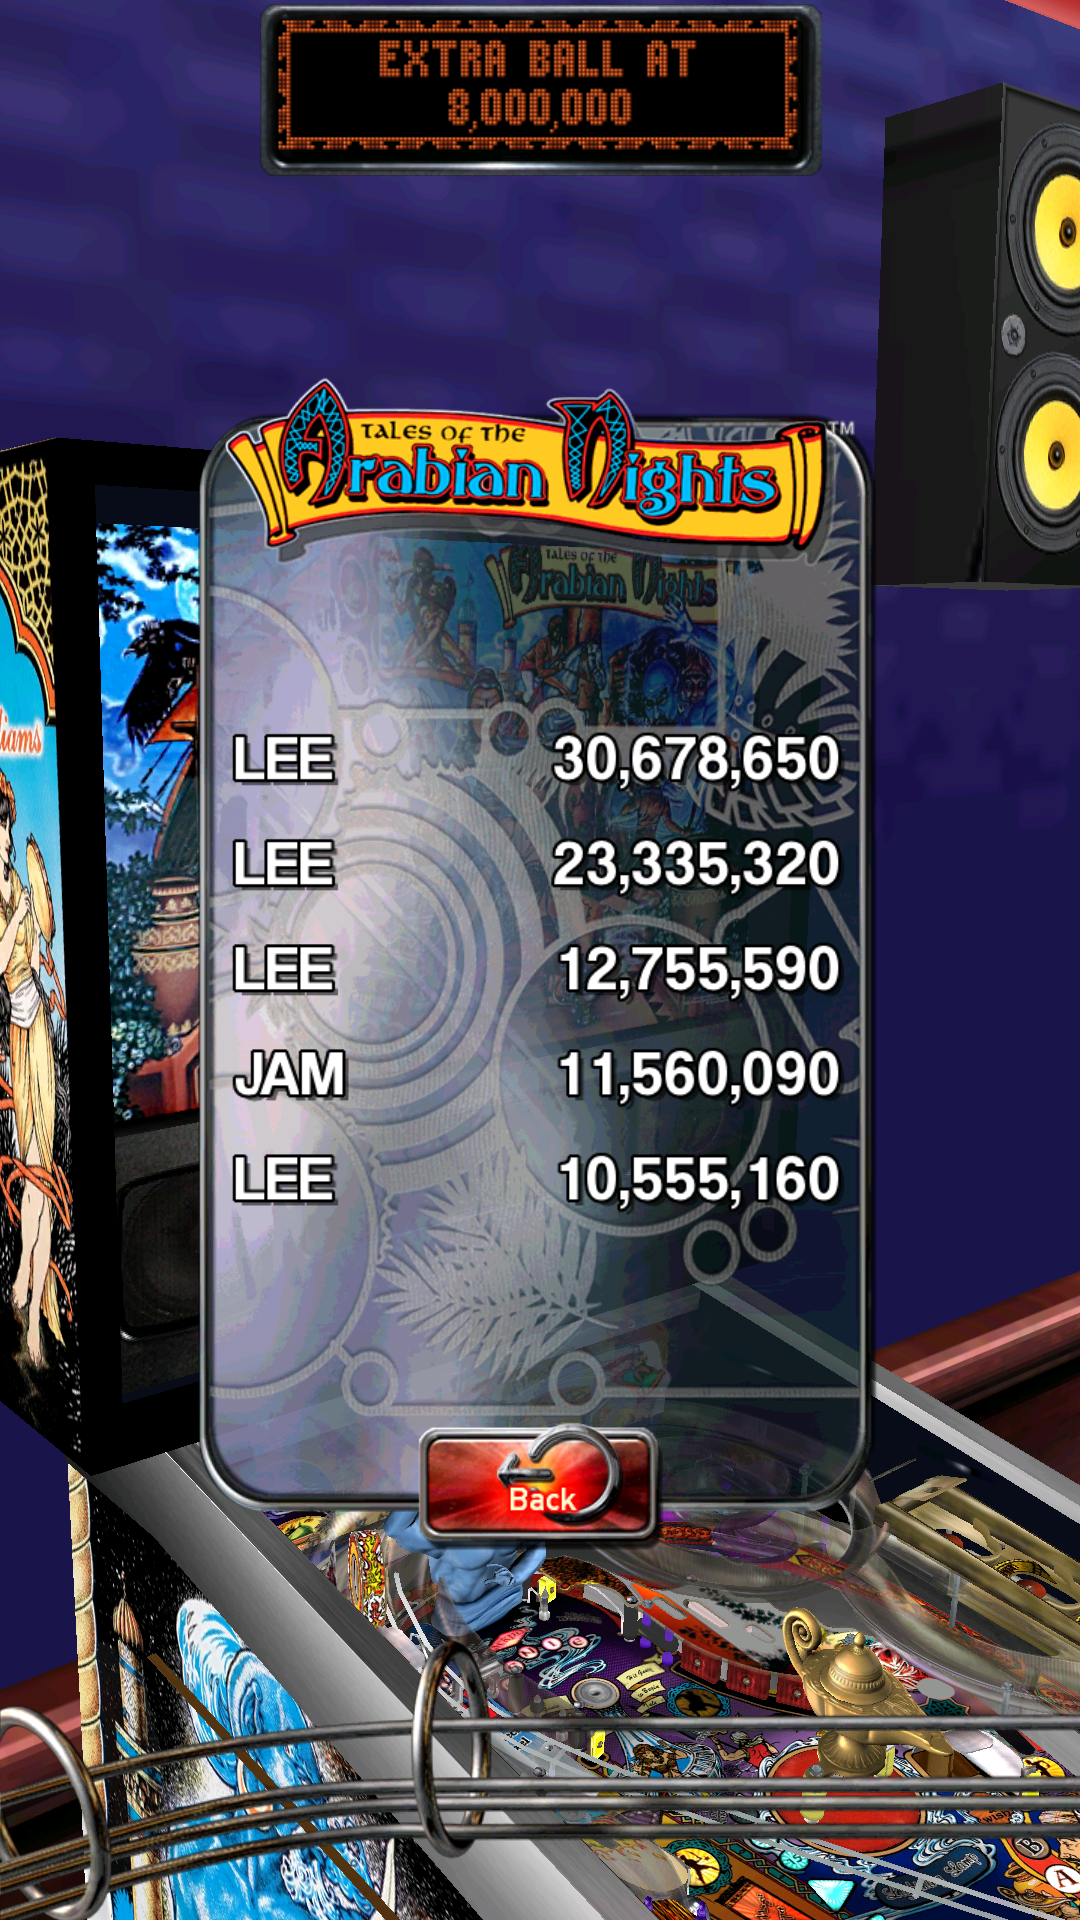 LeeJ07: Pinball Arcade: Arabian Knights (Android) 30,678,650 points on 2015-06-04 21:11:01